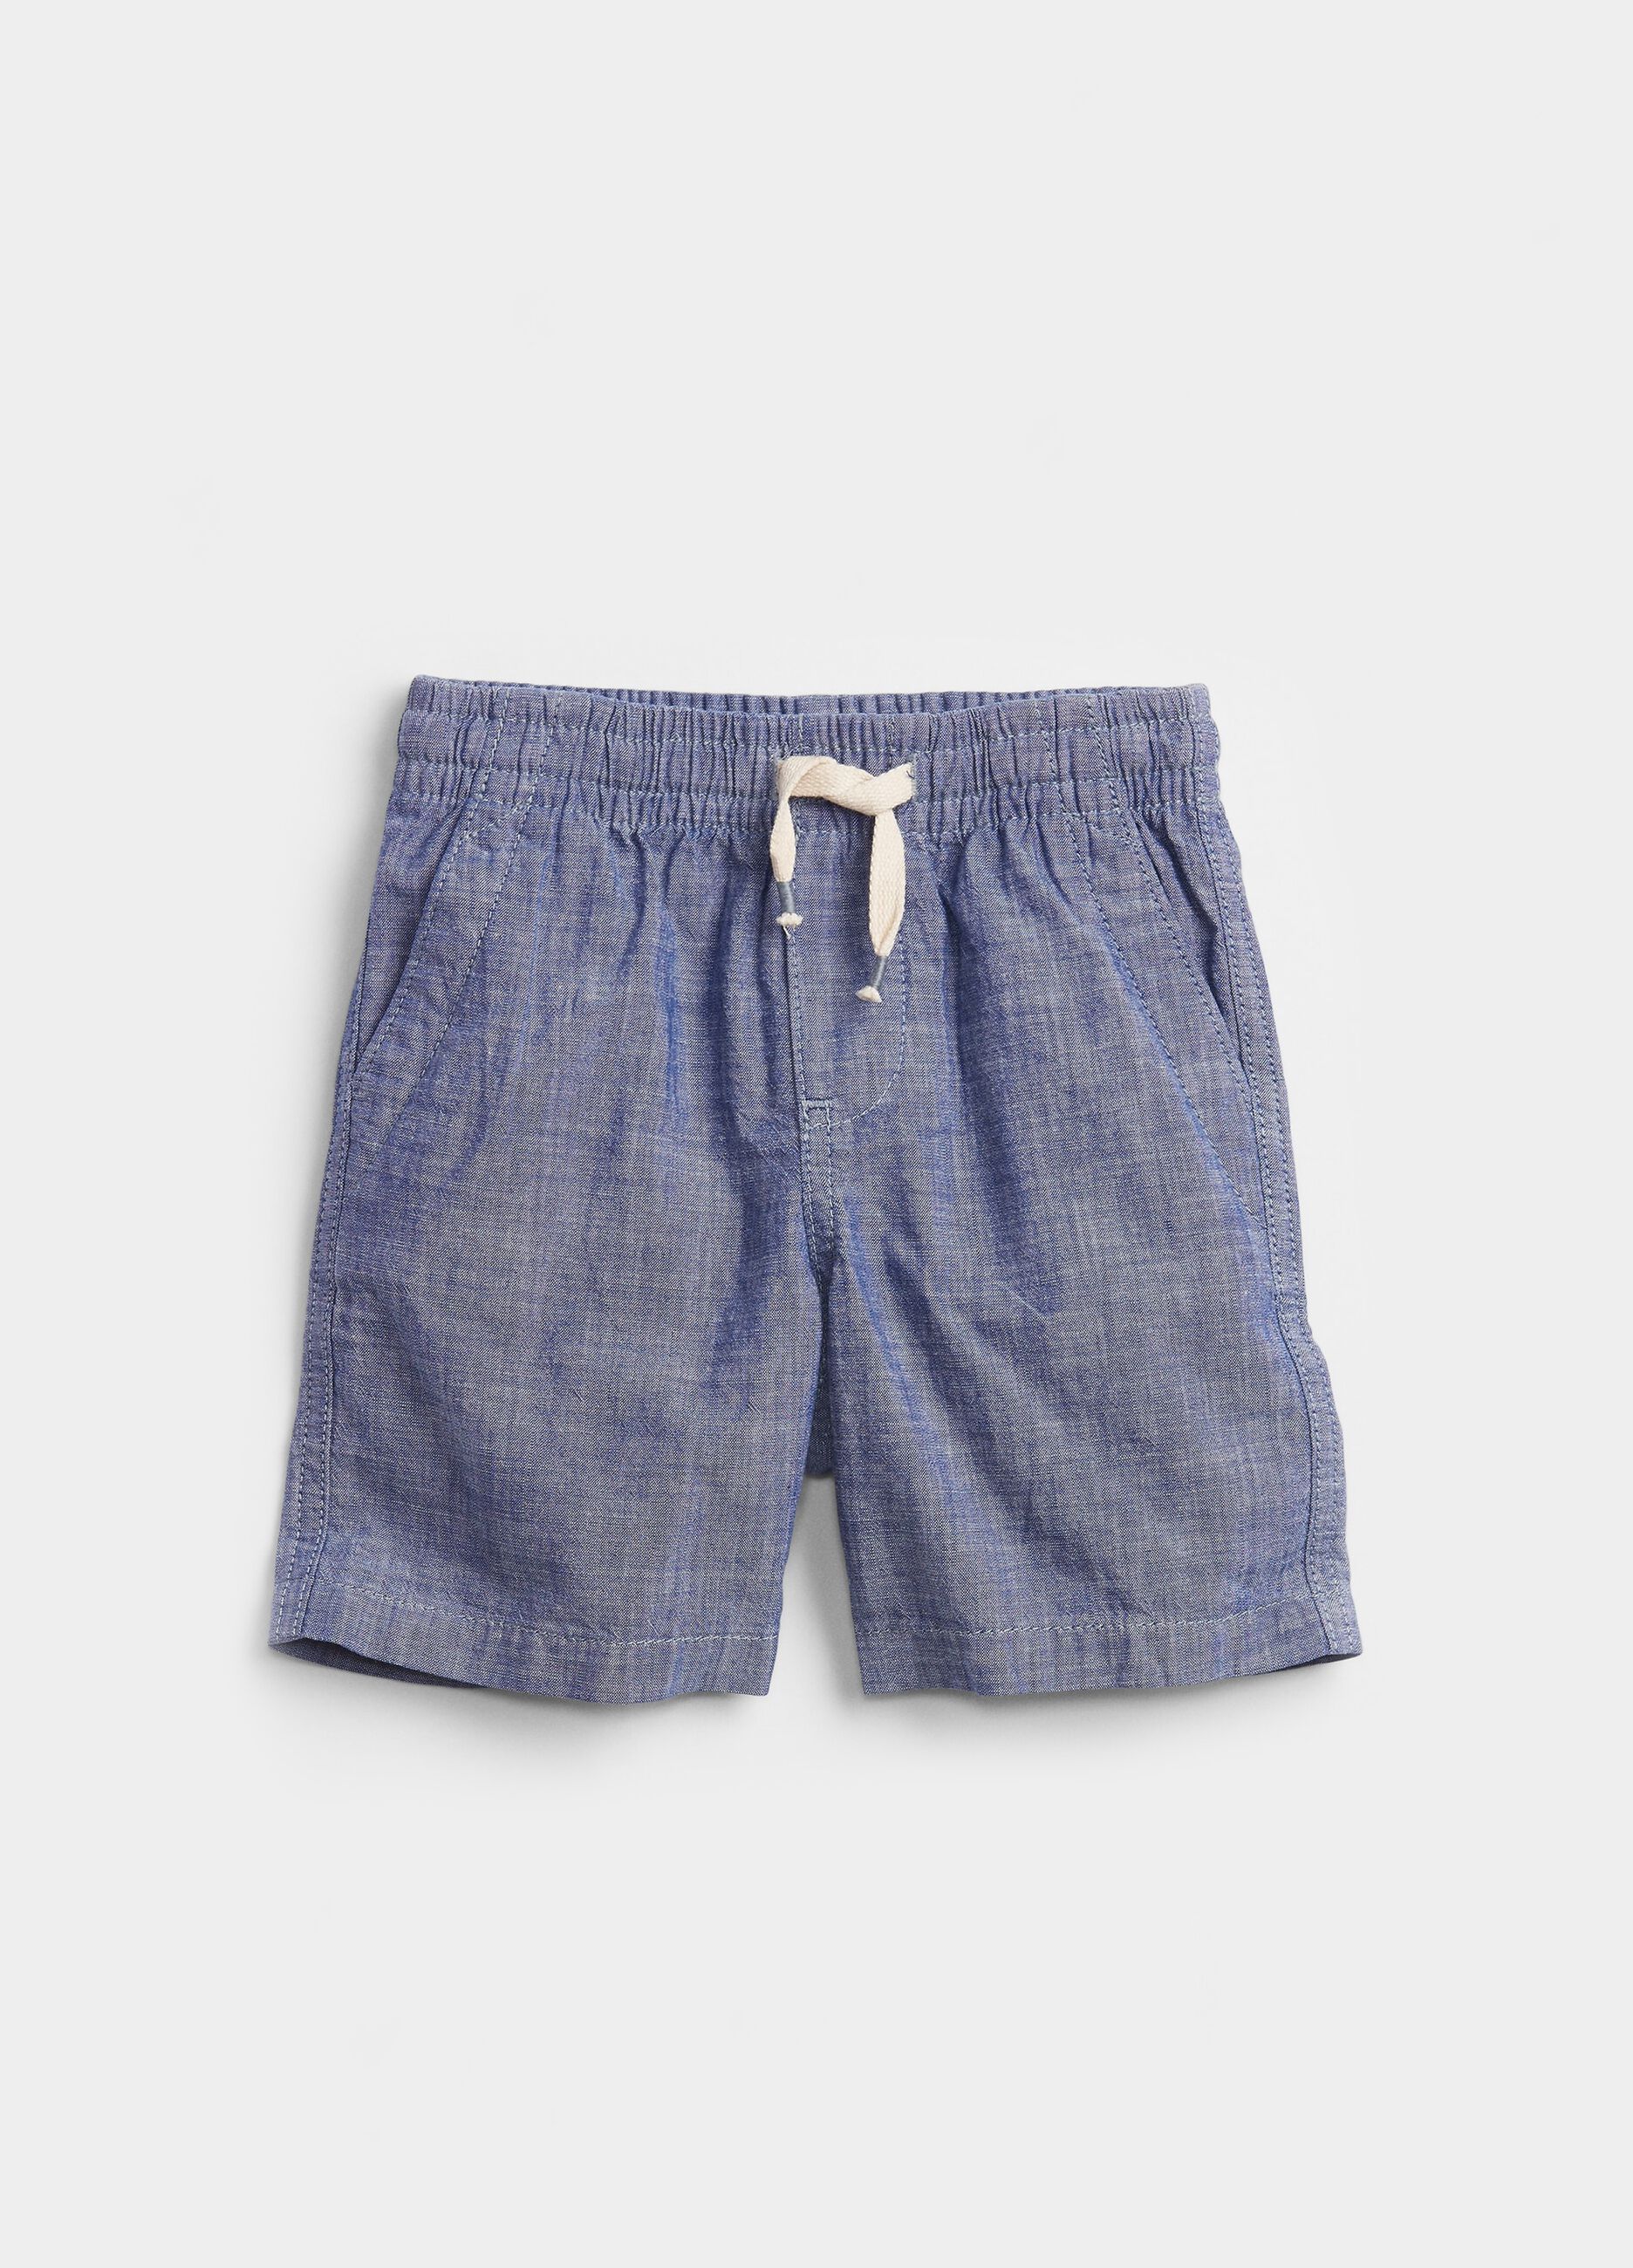 Bermuda shorts in chambray cotton